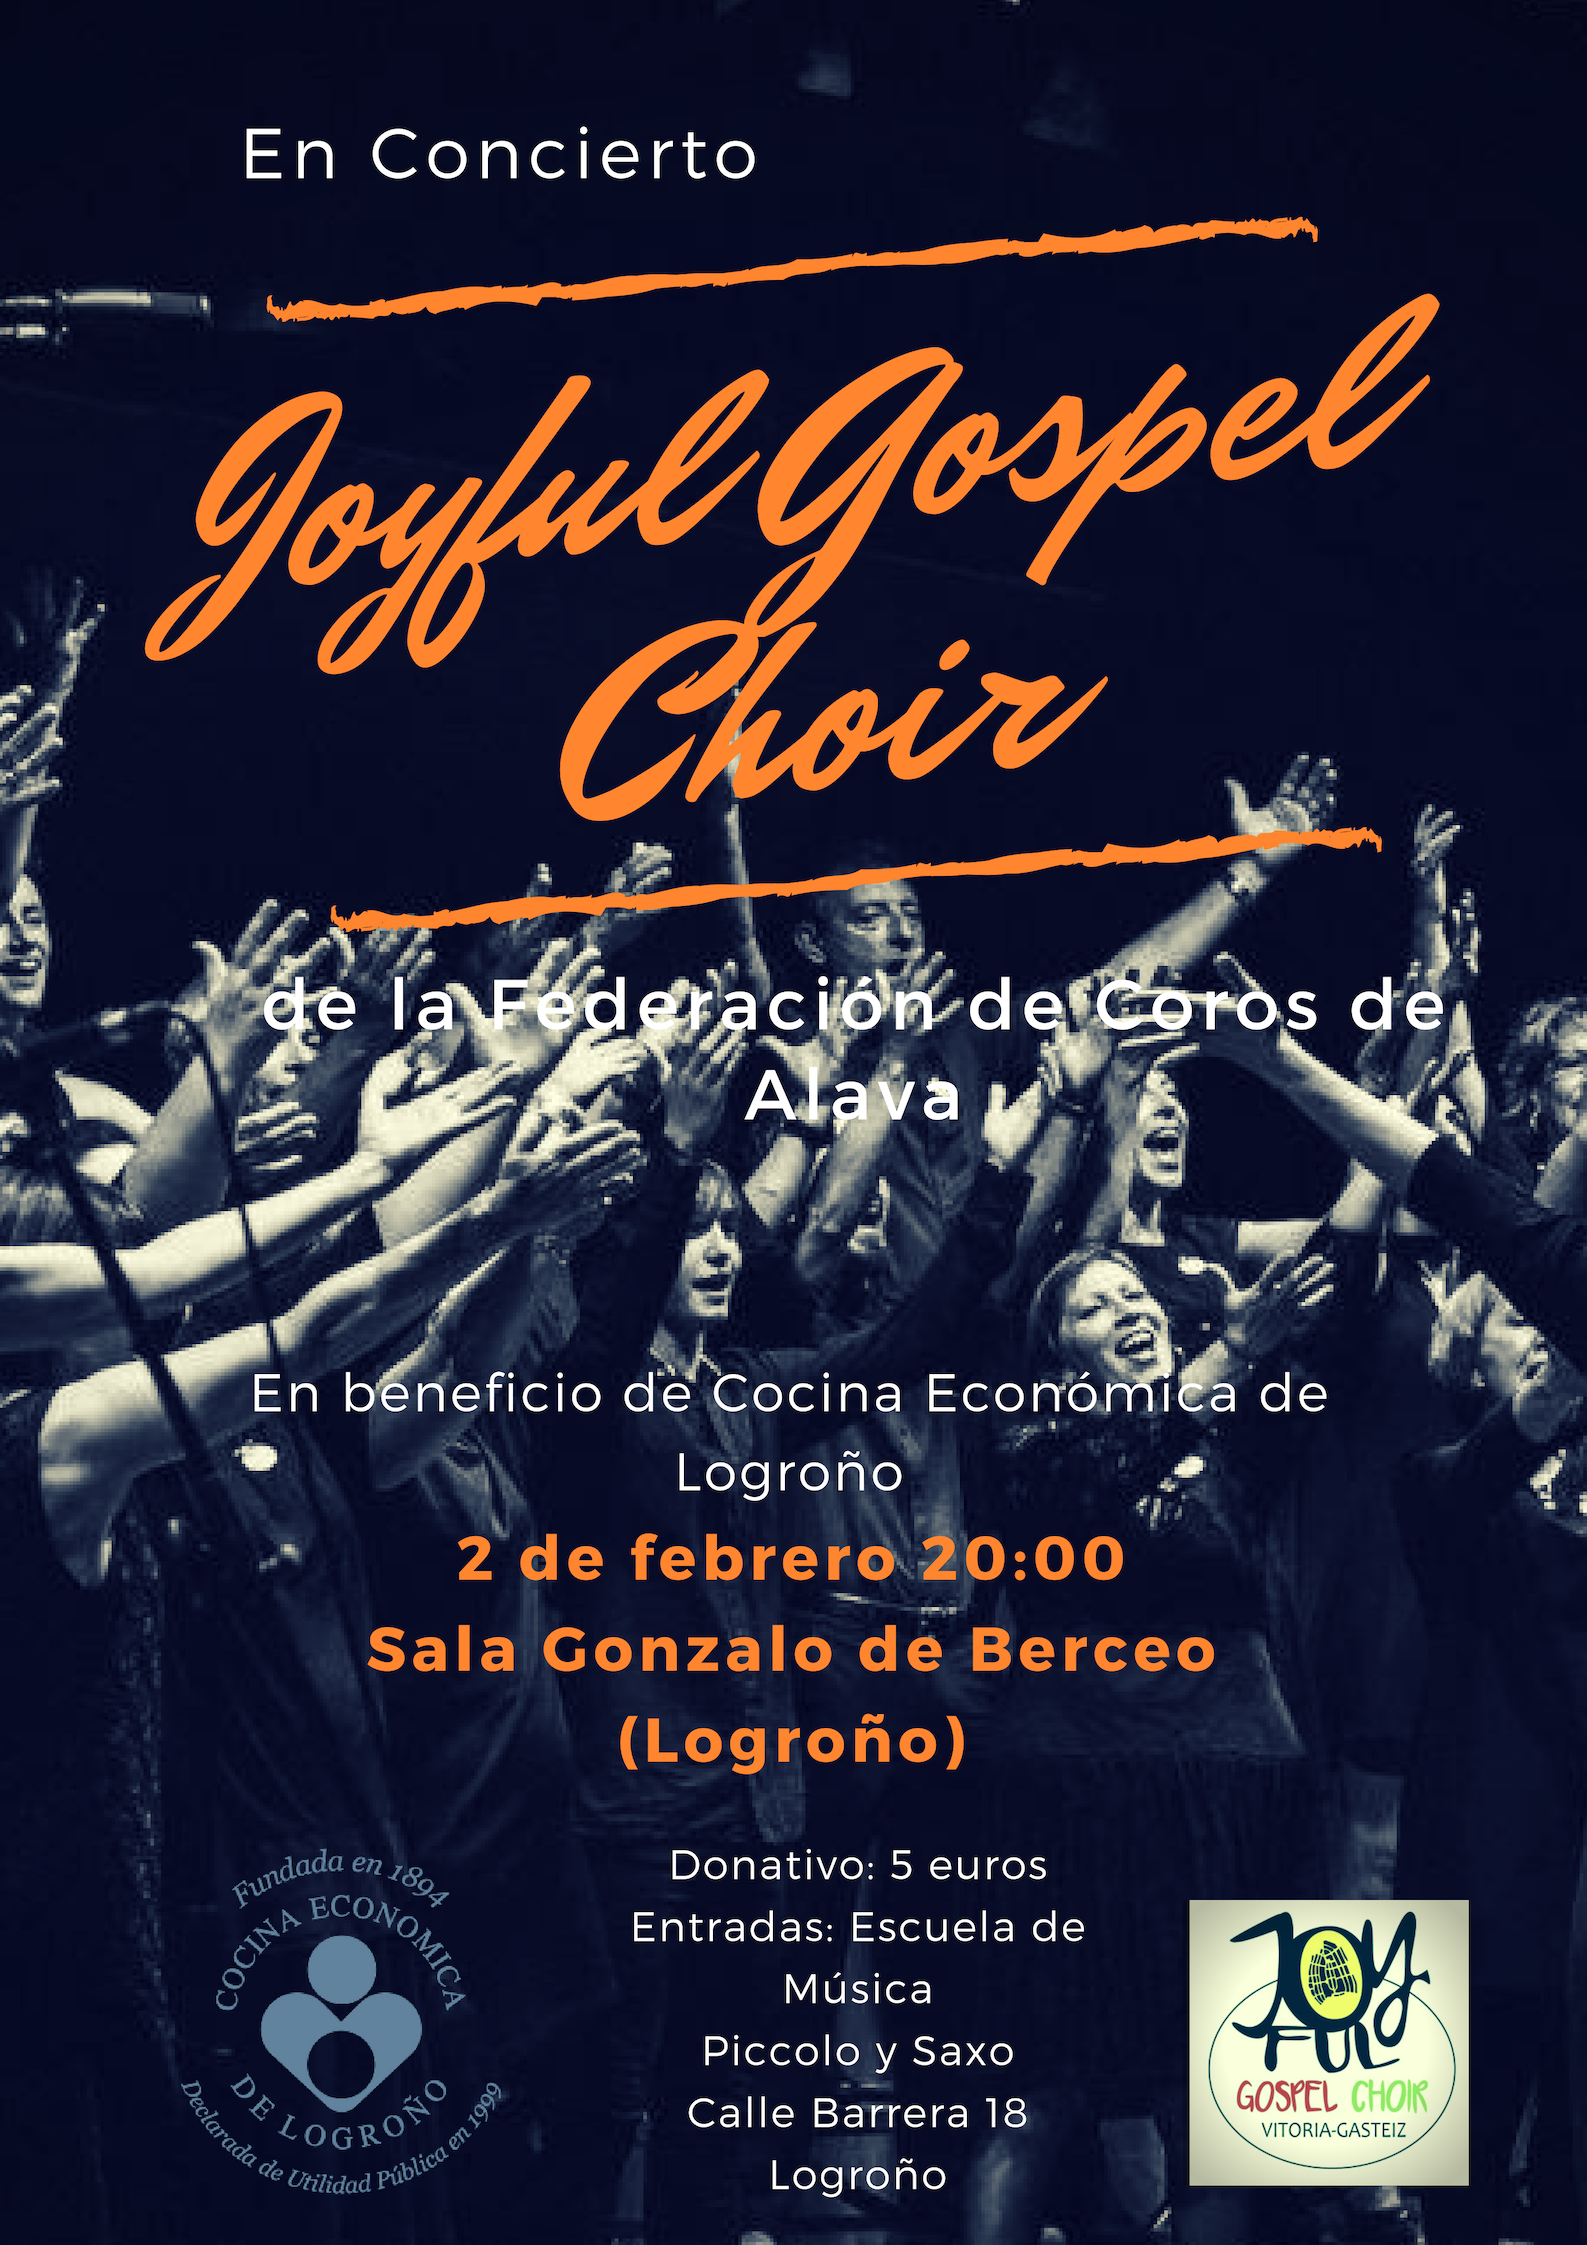 Joyful Gospel Choir en concierto!  Nos vamos a Logroño! ️ Sábado 2 de febrero a las 20:00h.  Sala Gonzalo de Berceo, a favor de Cocina Económica de Logroño, comedor social desde 1894